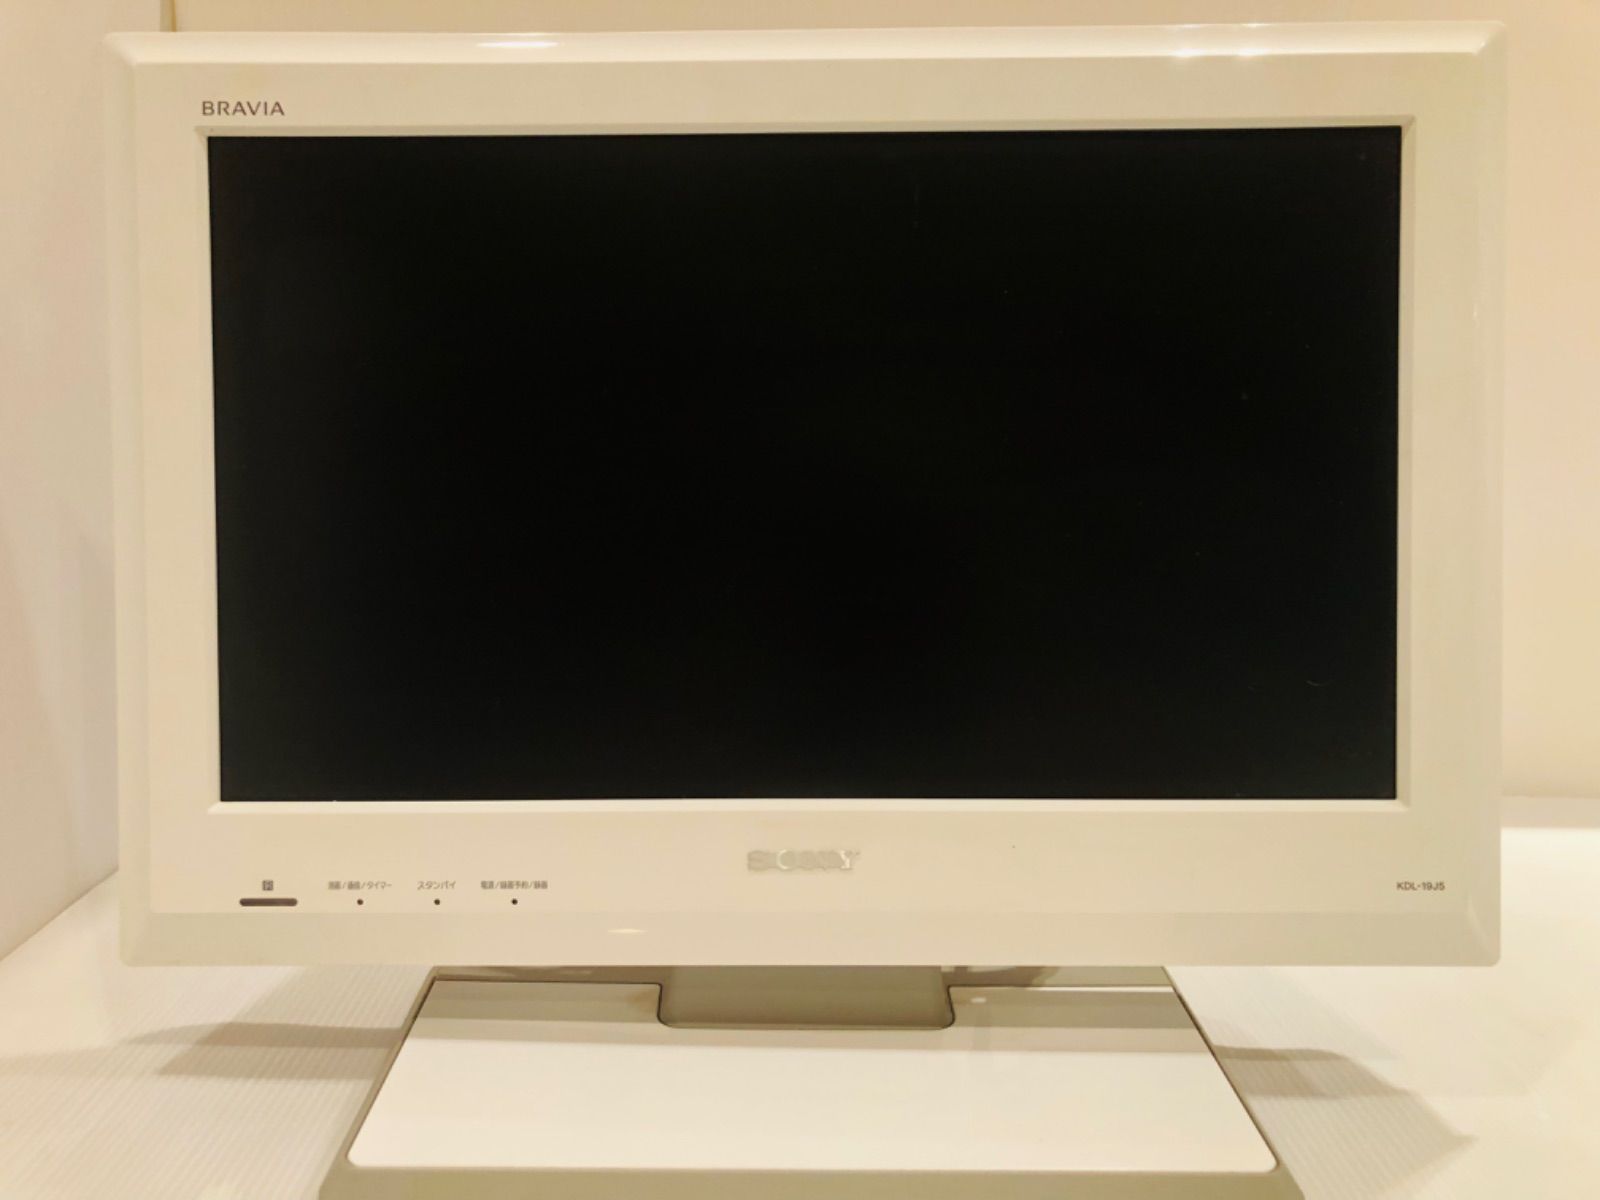 SONY BRAVIA 19型液晶テレビ KDL-19J5 ホワイト